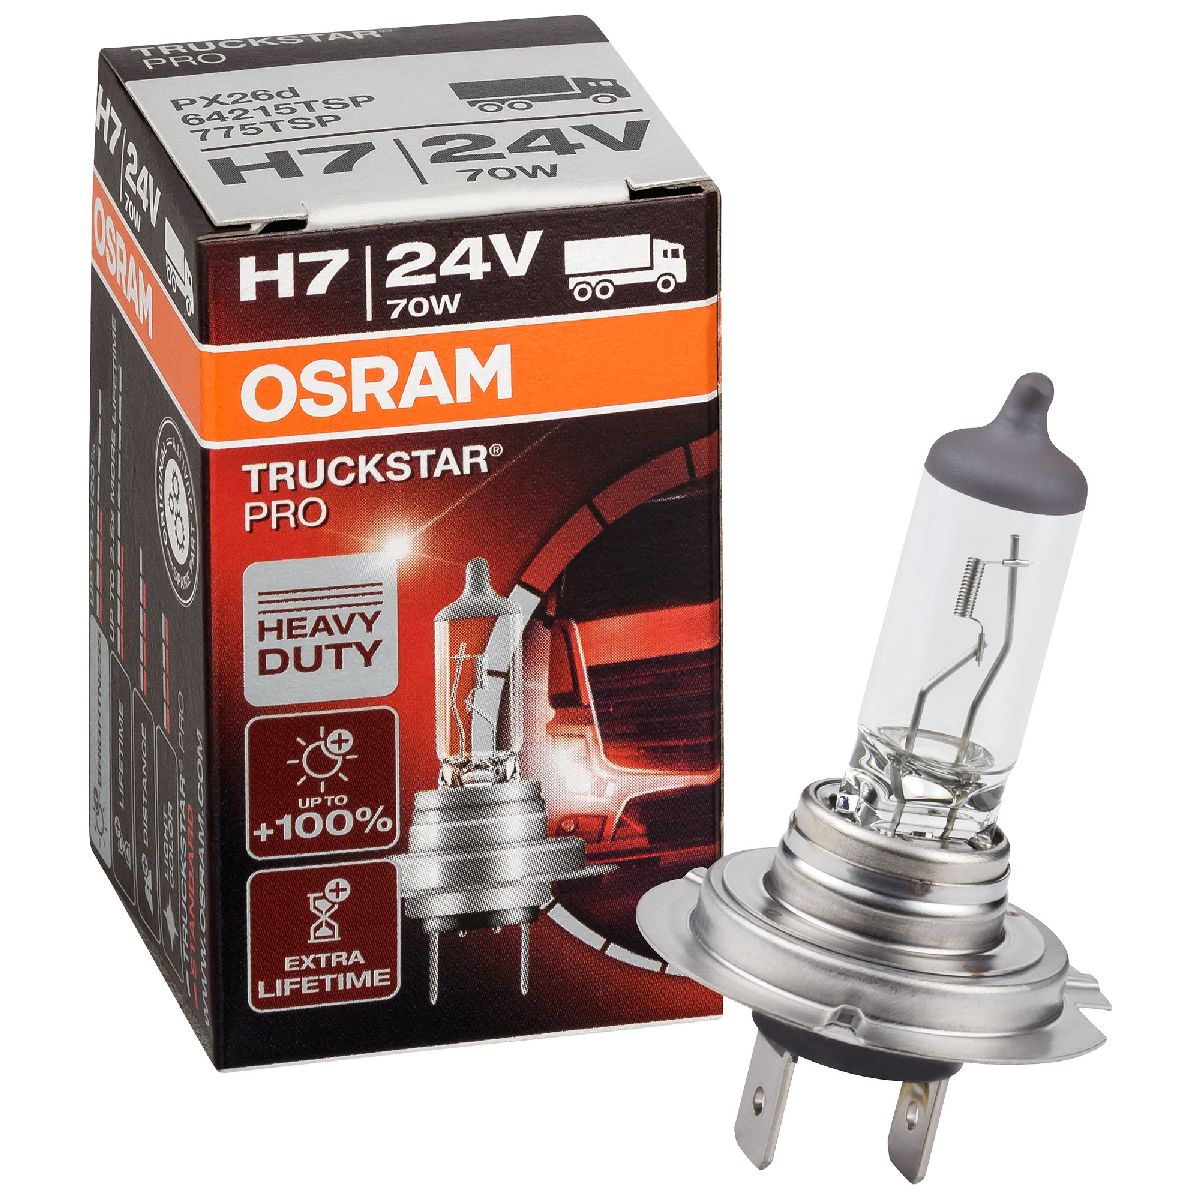 Osram Aktions-Paket - 30x H7 24V 70W P26d Original + 1x Sammel-Metallschild  LKW OS 64215_30